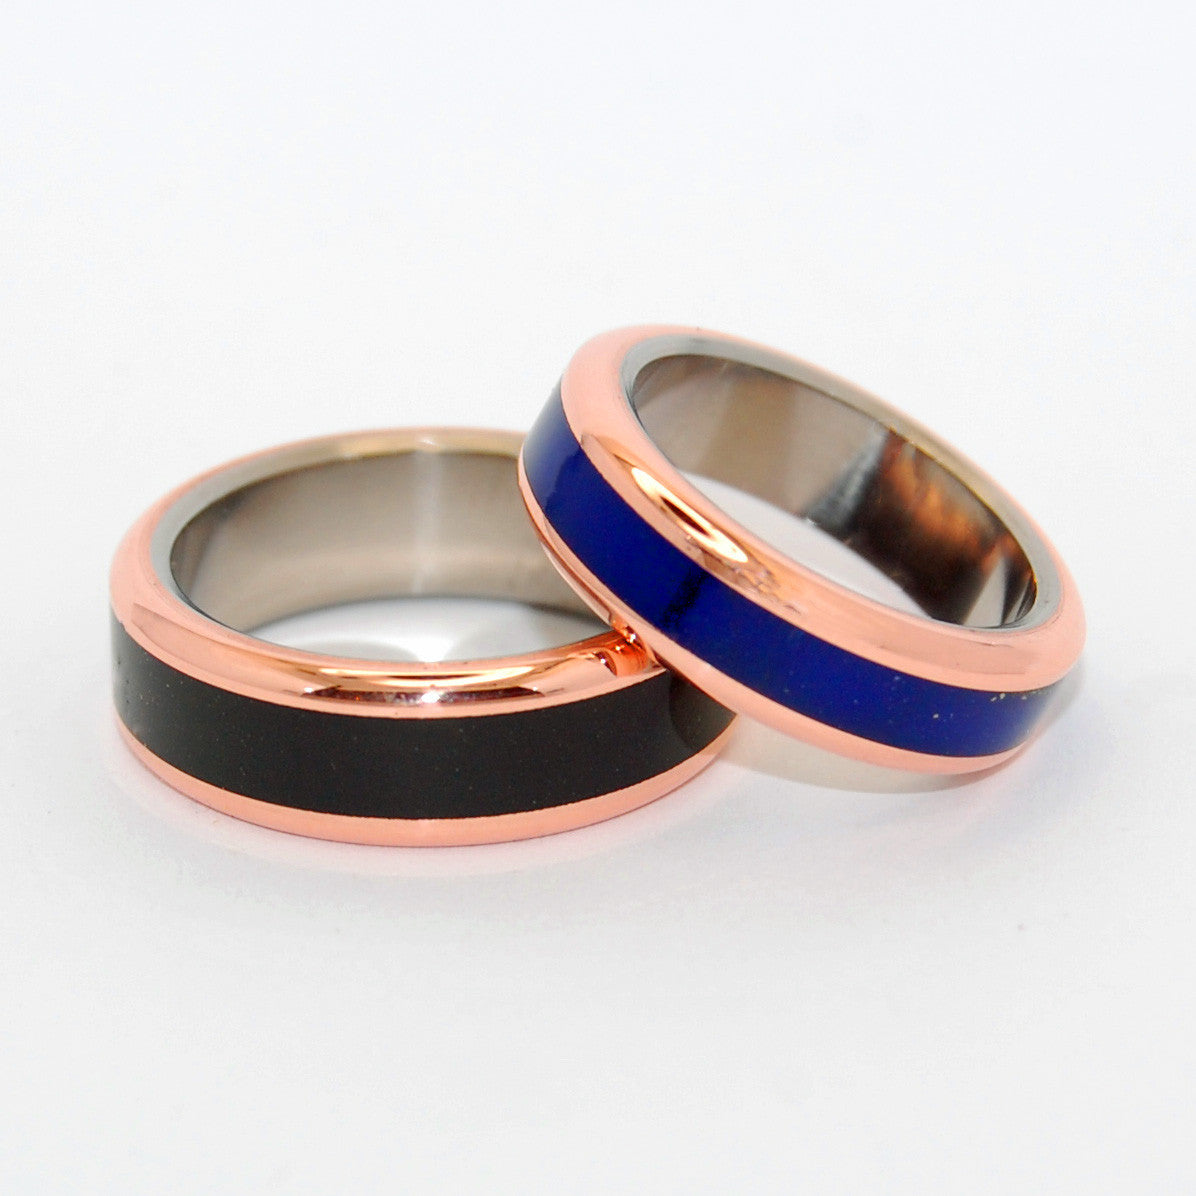 THE BODY OF HEAVEN | Titanium, Copper & Lapis Lazuli Stone Women's Wedding Rings - Minter and Richter Designs